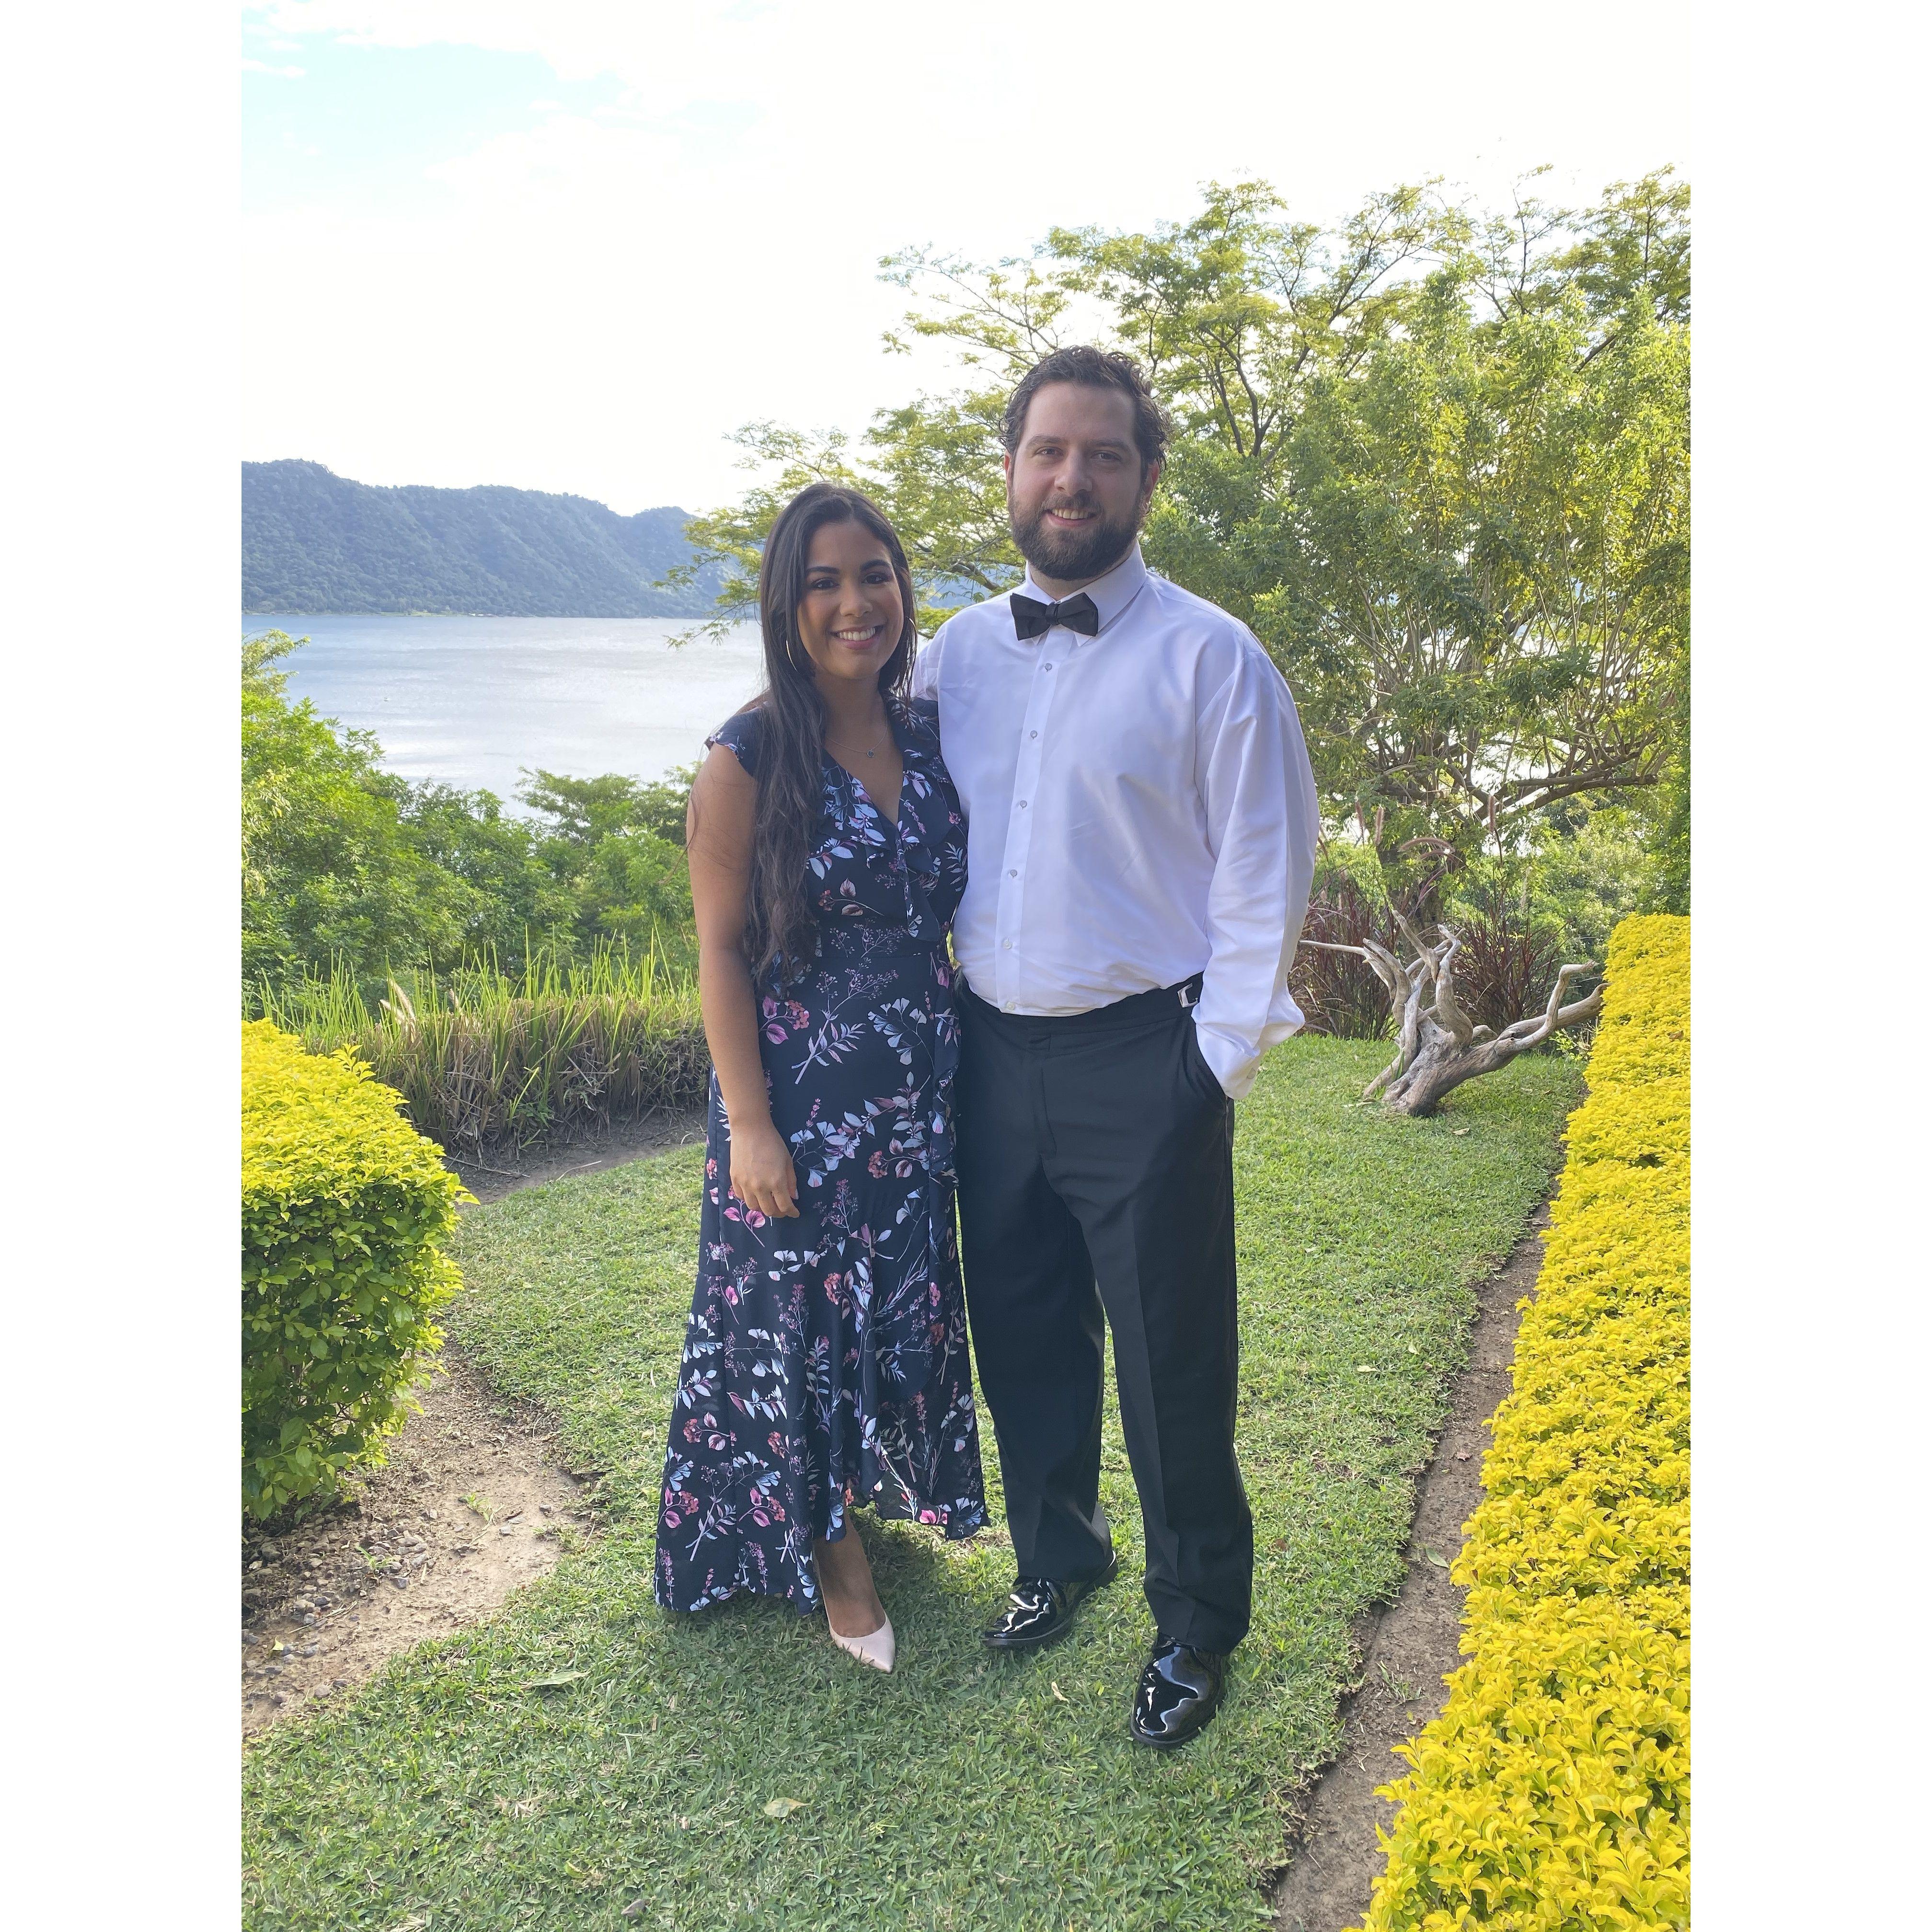 November 2019 Lago Coatepeque, El Salvador. The day before we got engaged.